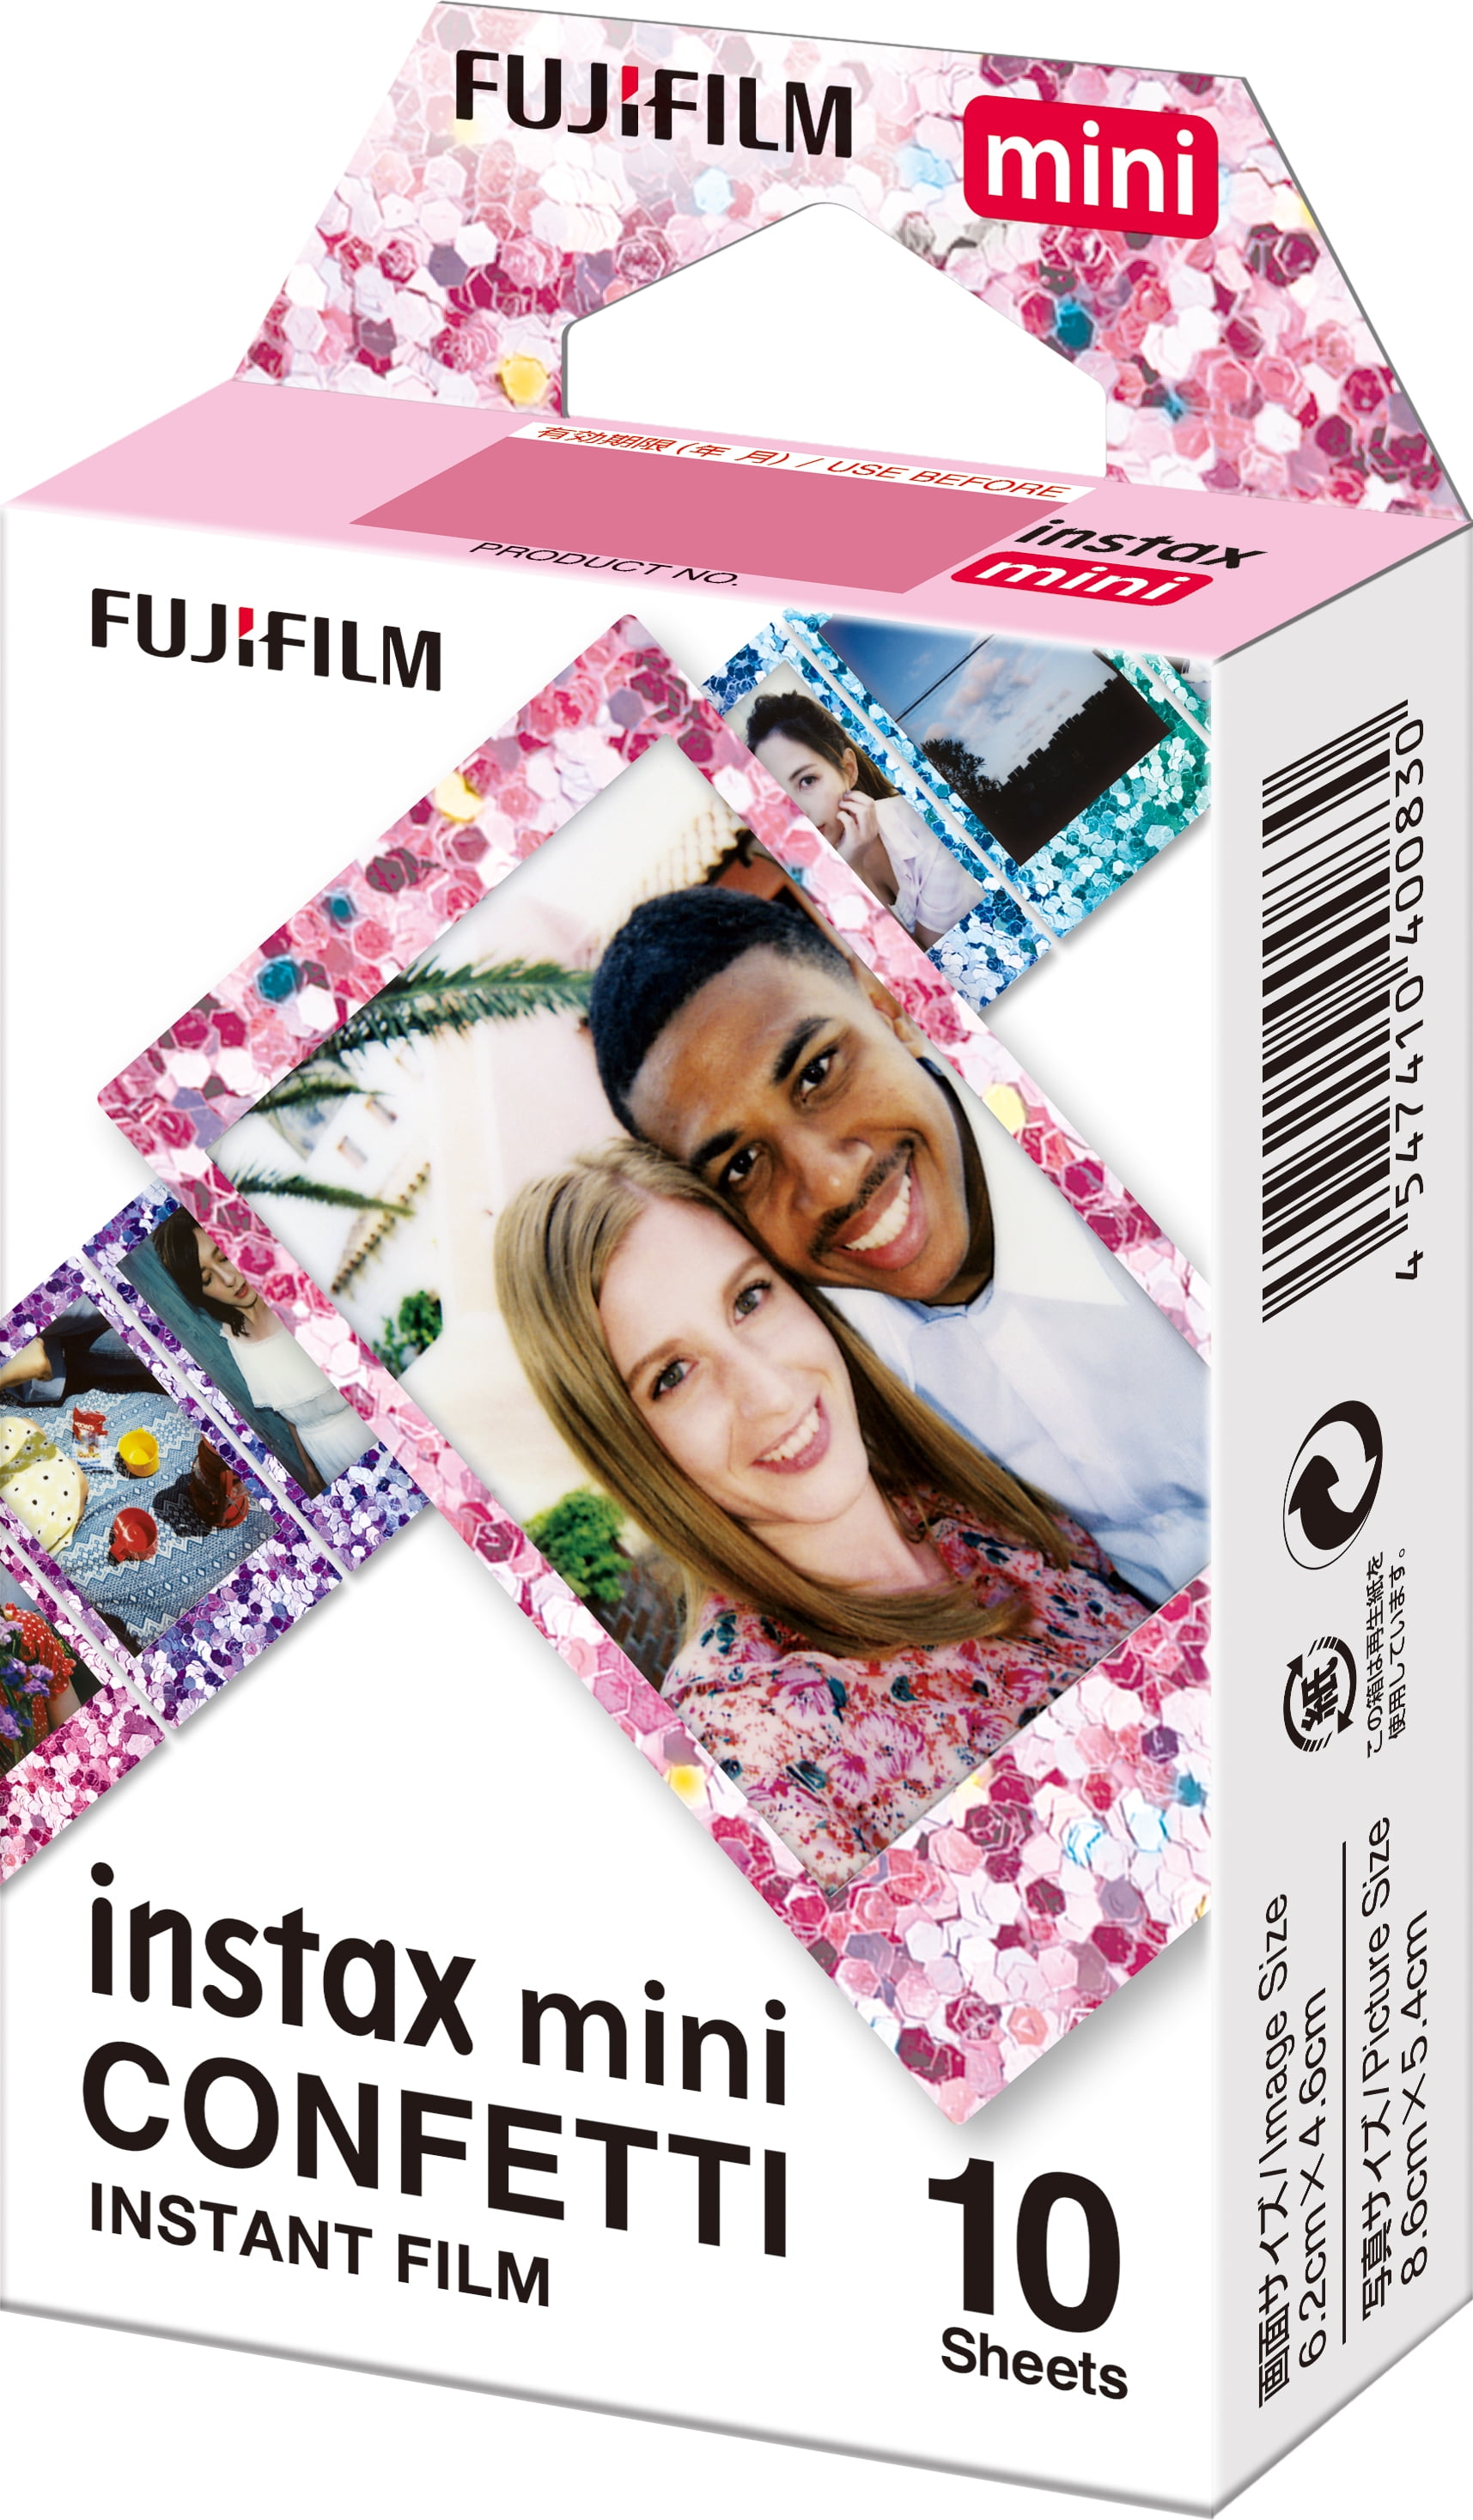 Fujifilm Instax Mini Candy Pop Papel Fotográfico para Cámaras